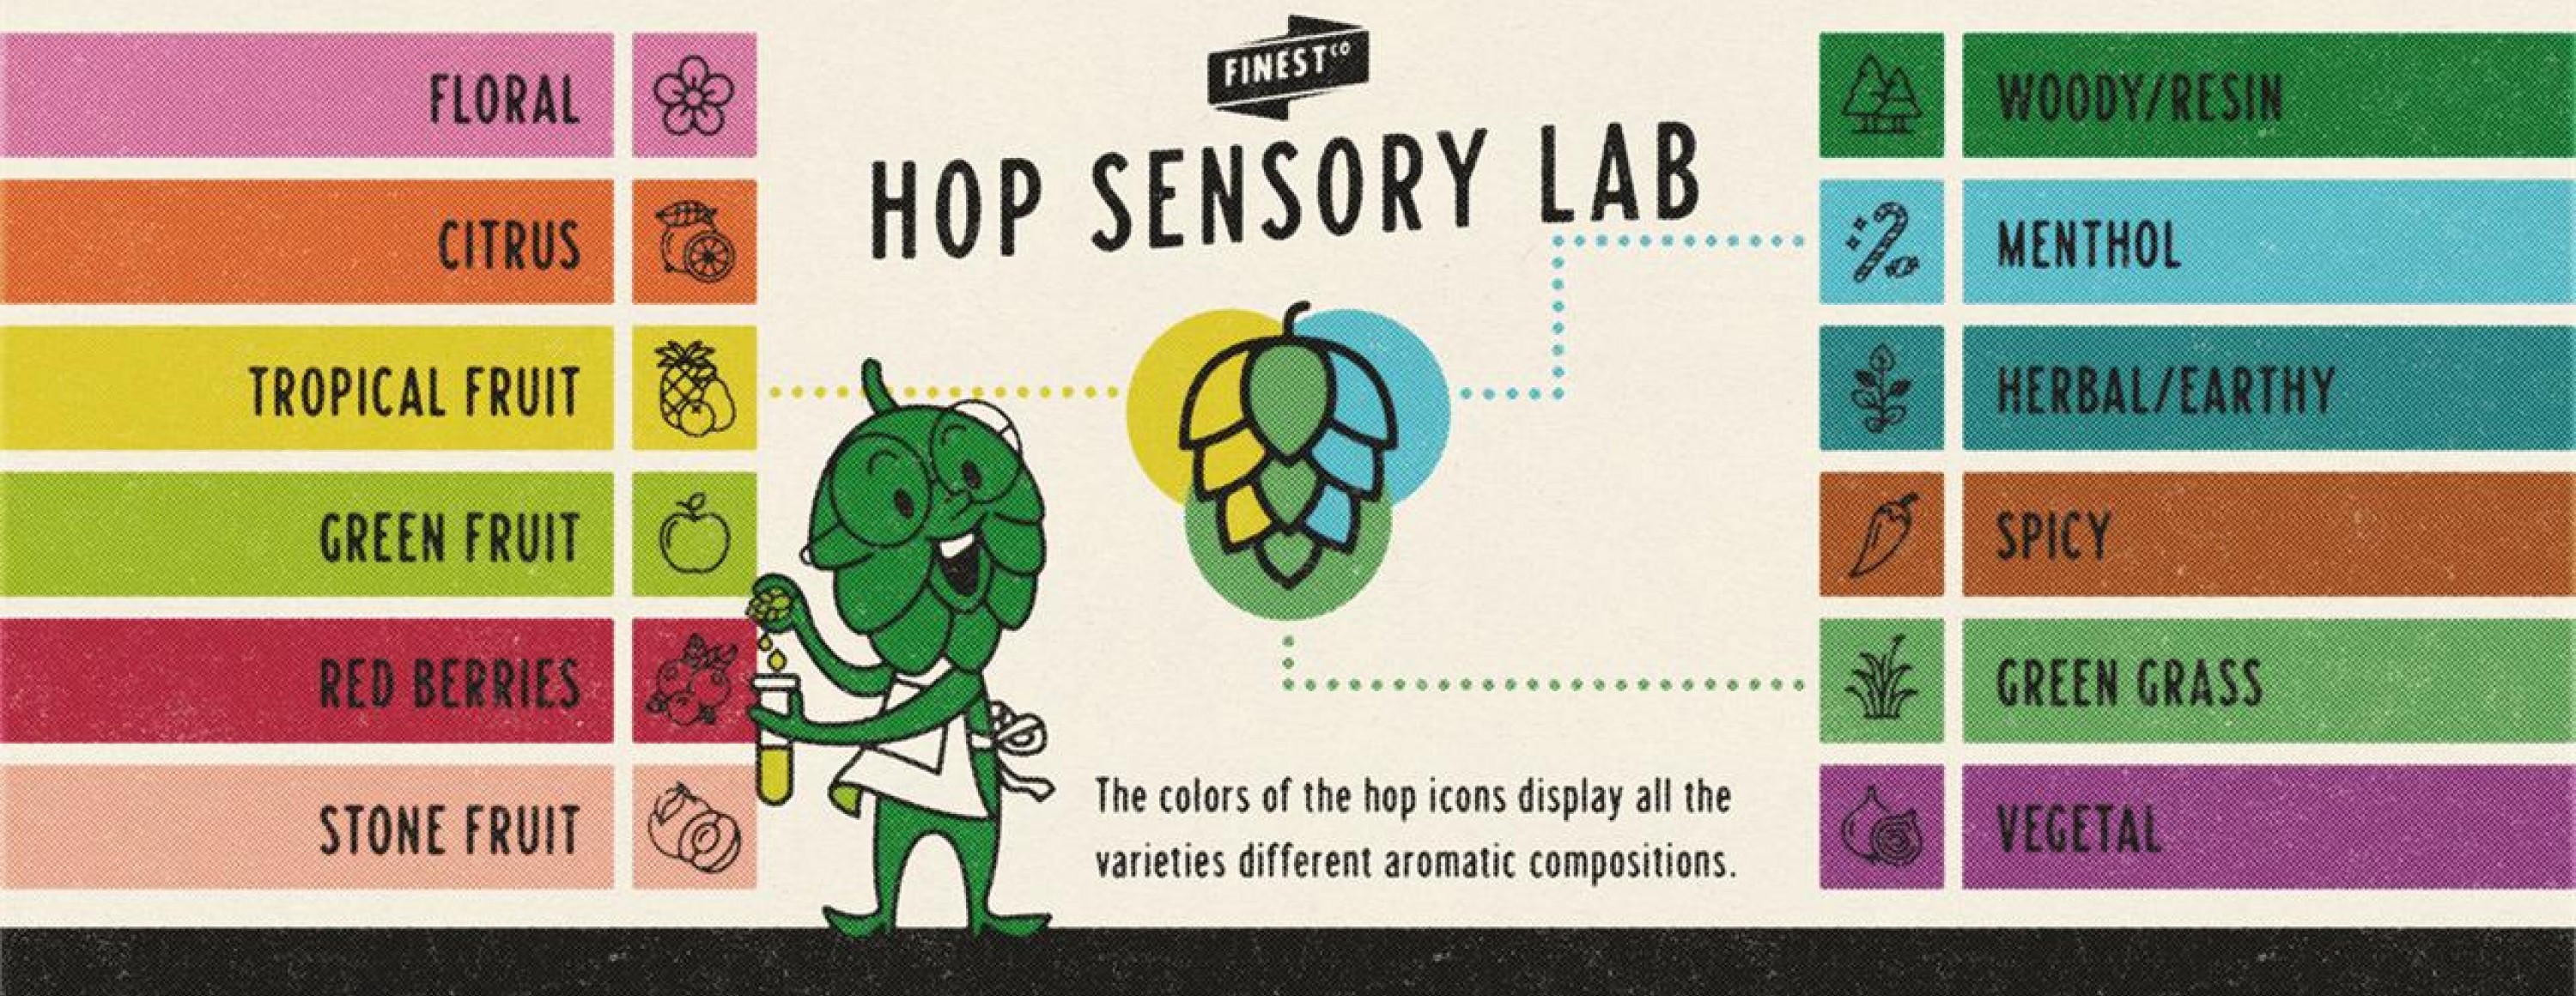 Finest hop sensory